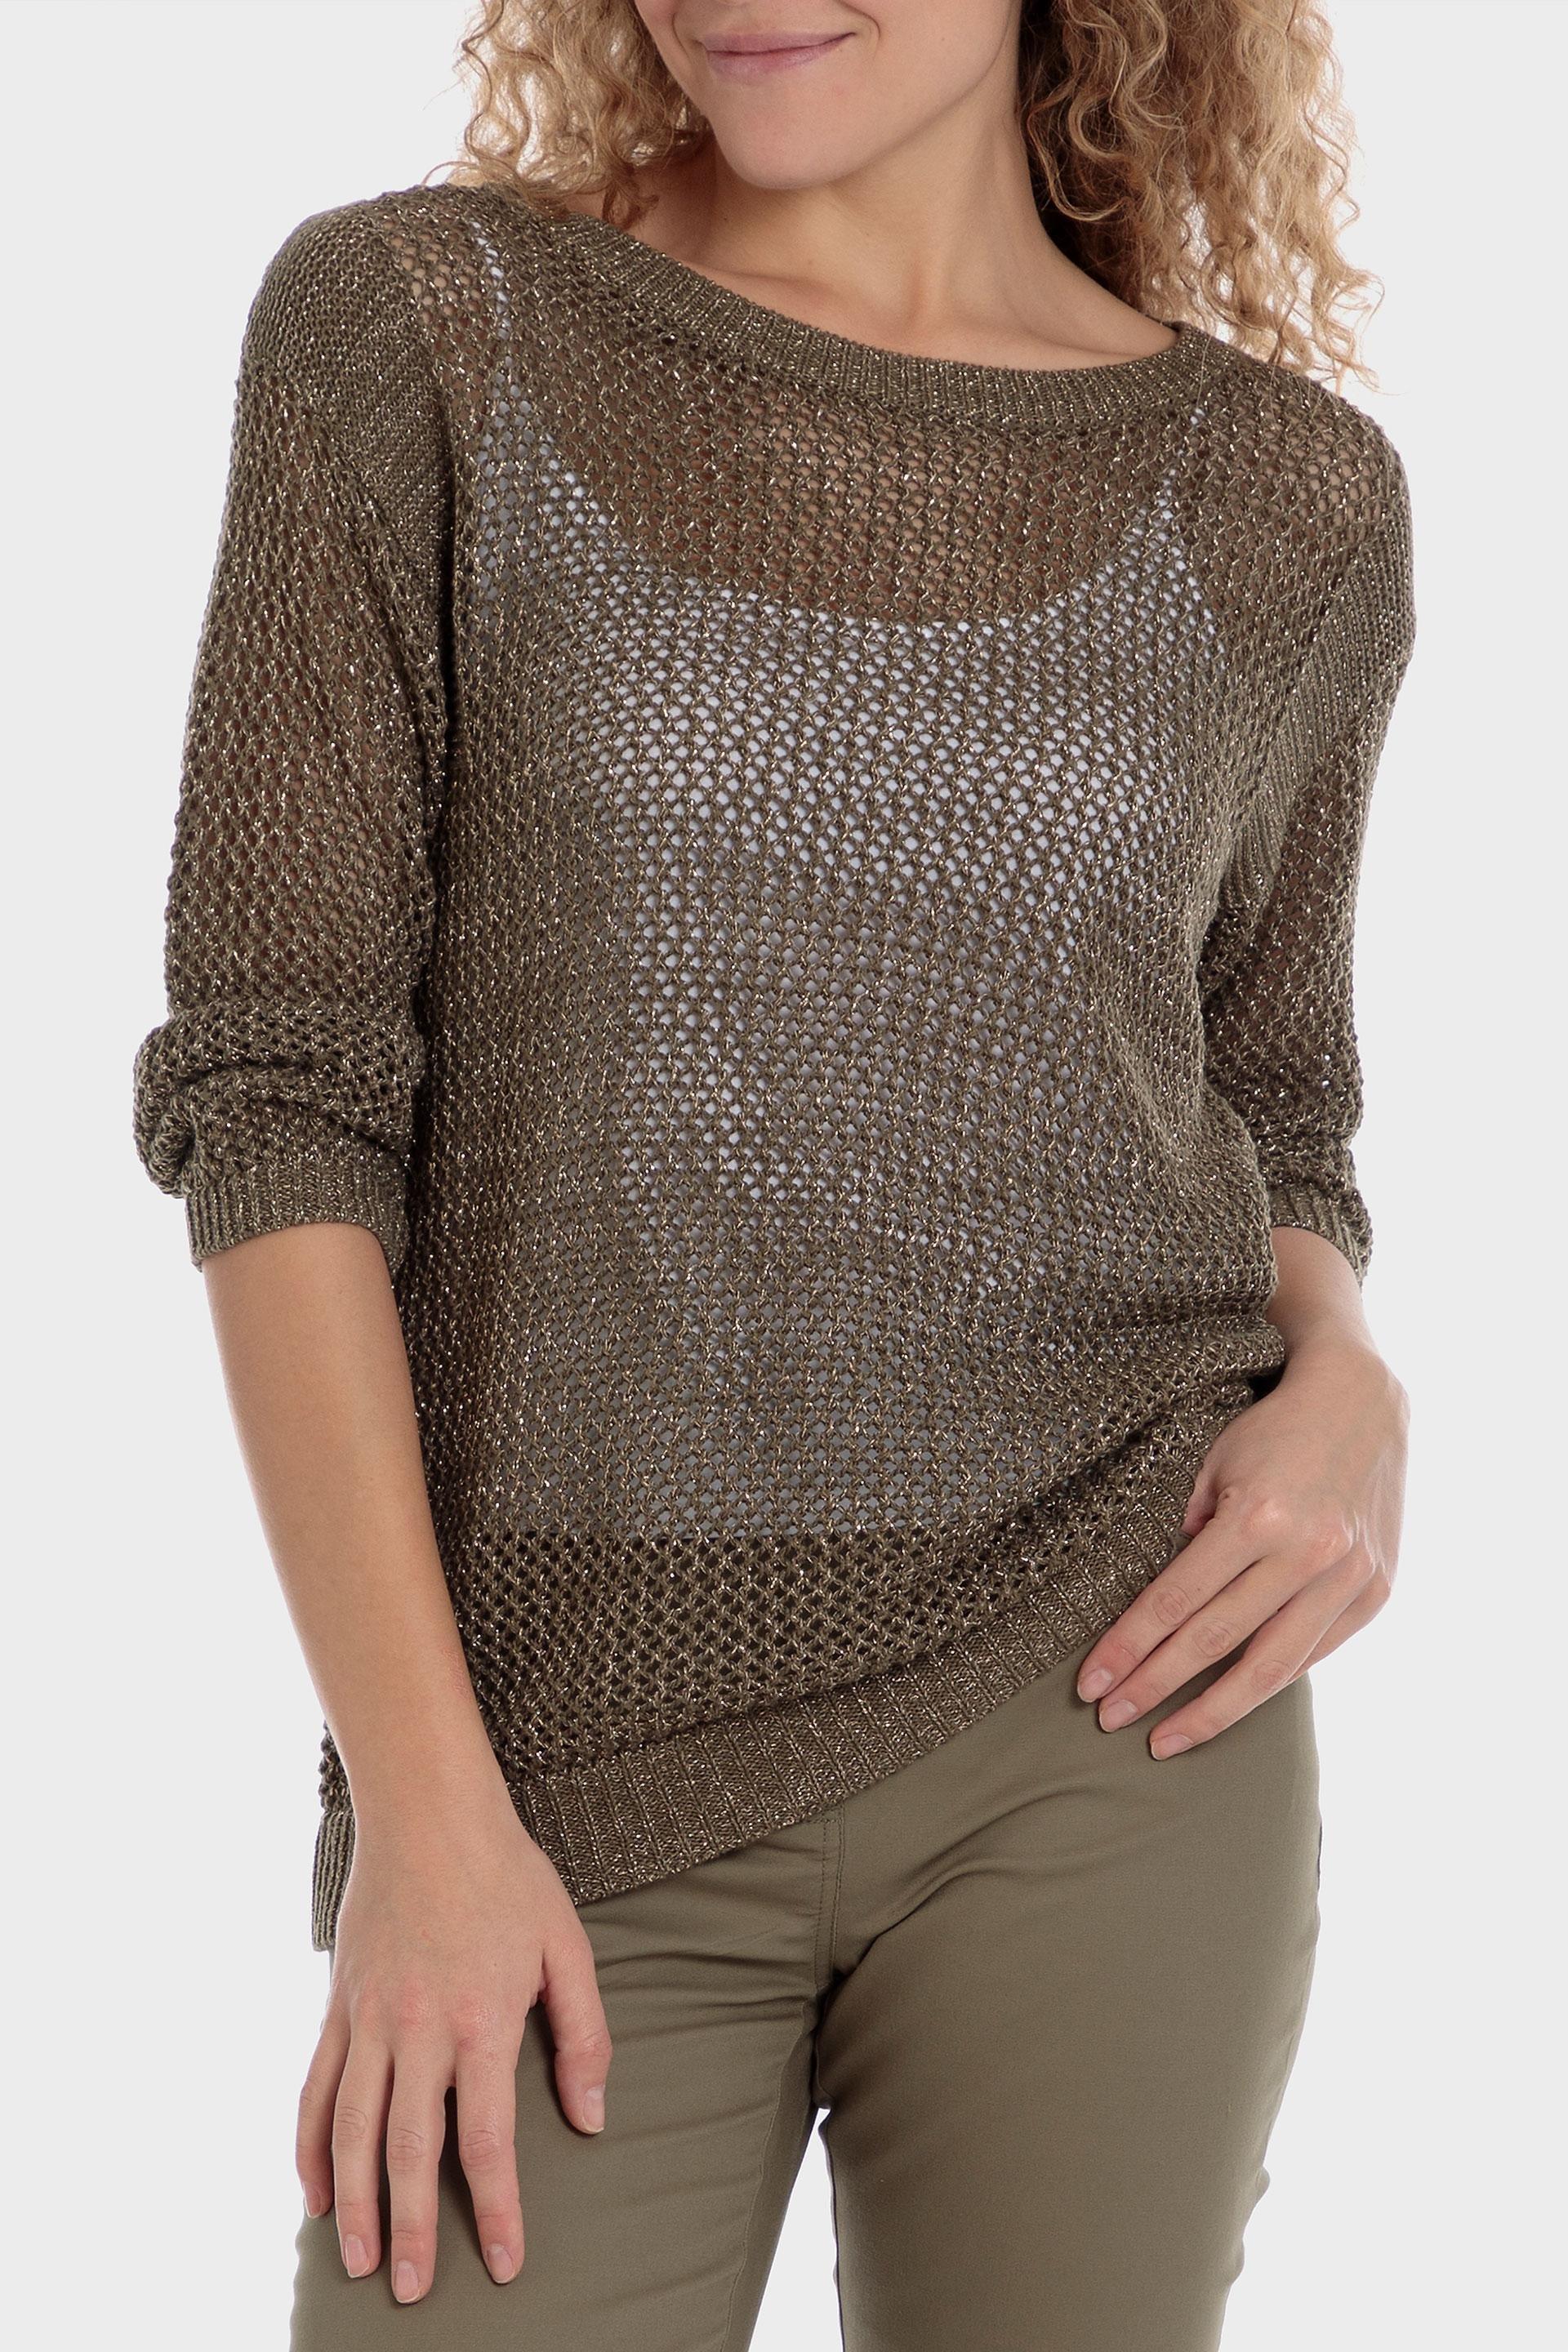 Punt Roma - Brown Openwork Sweater